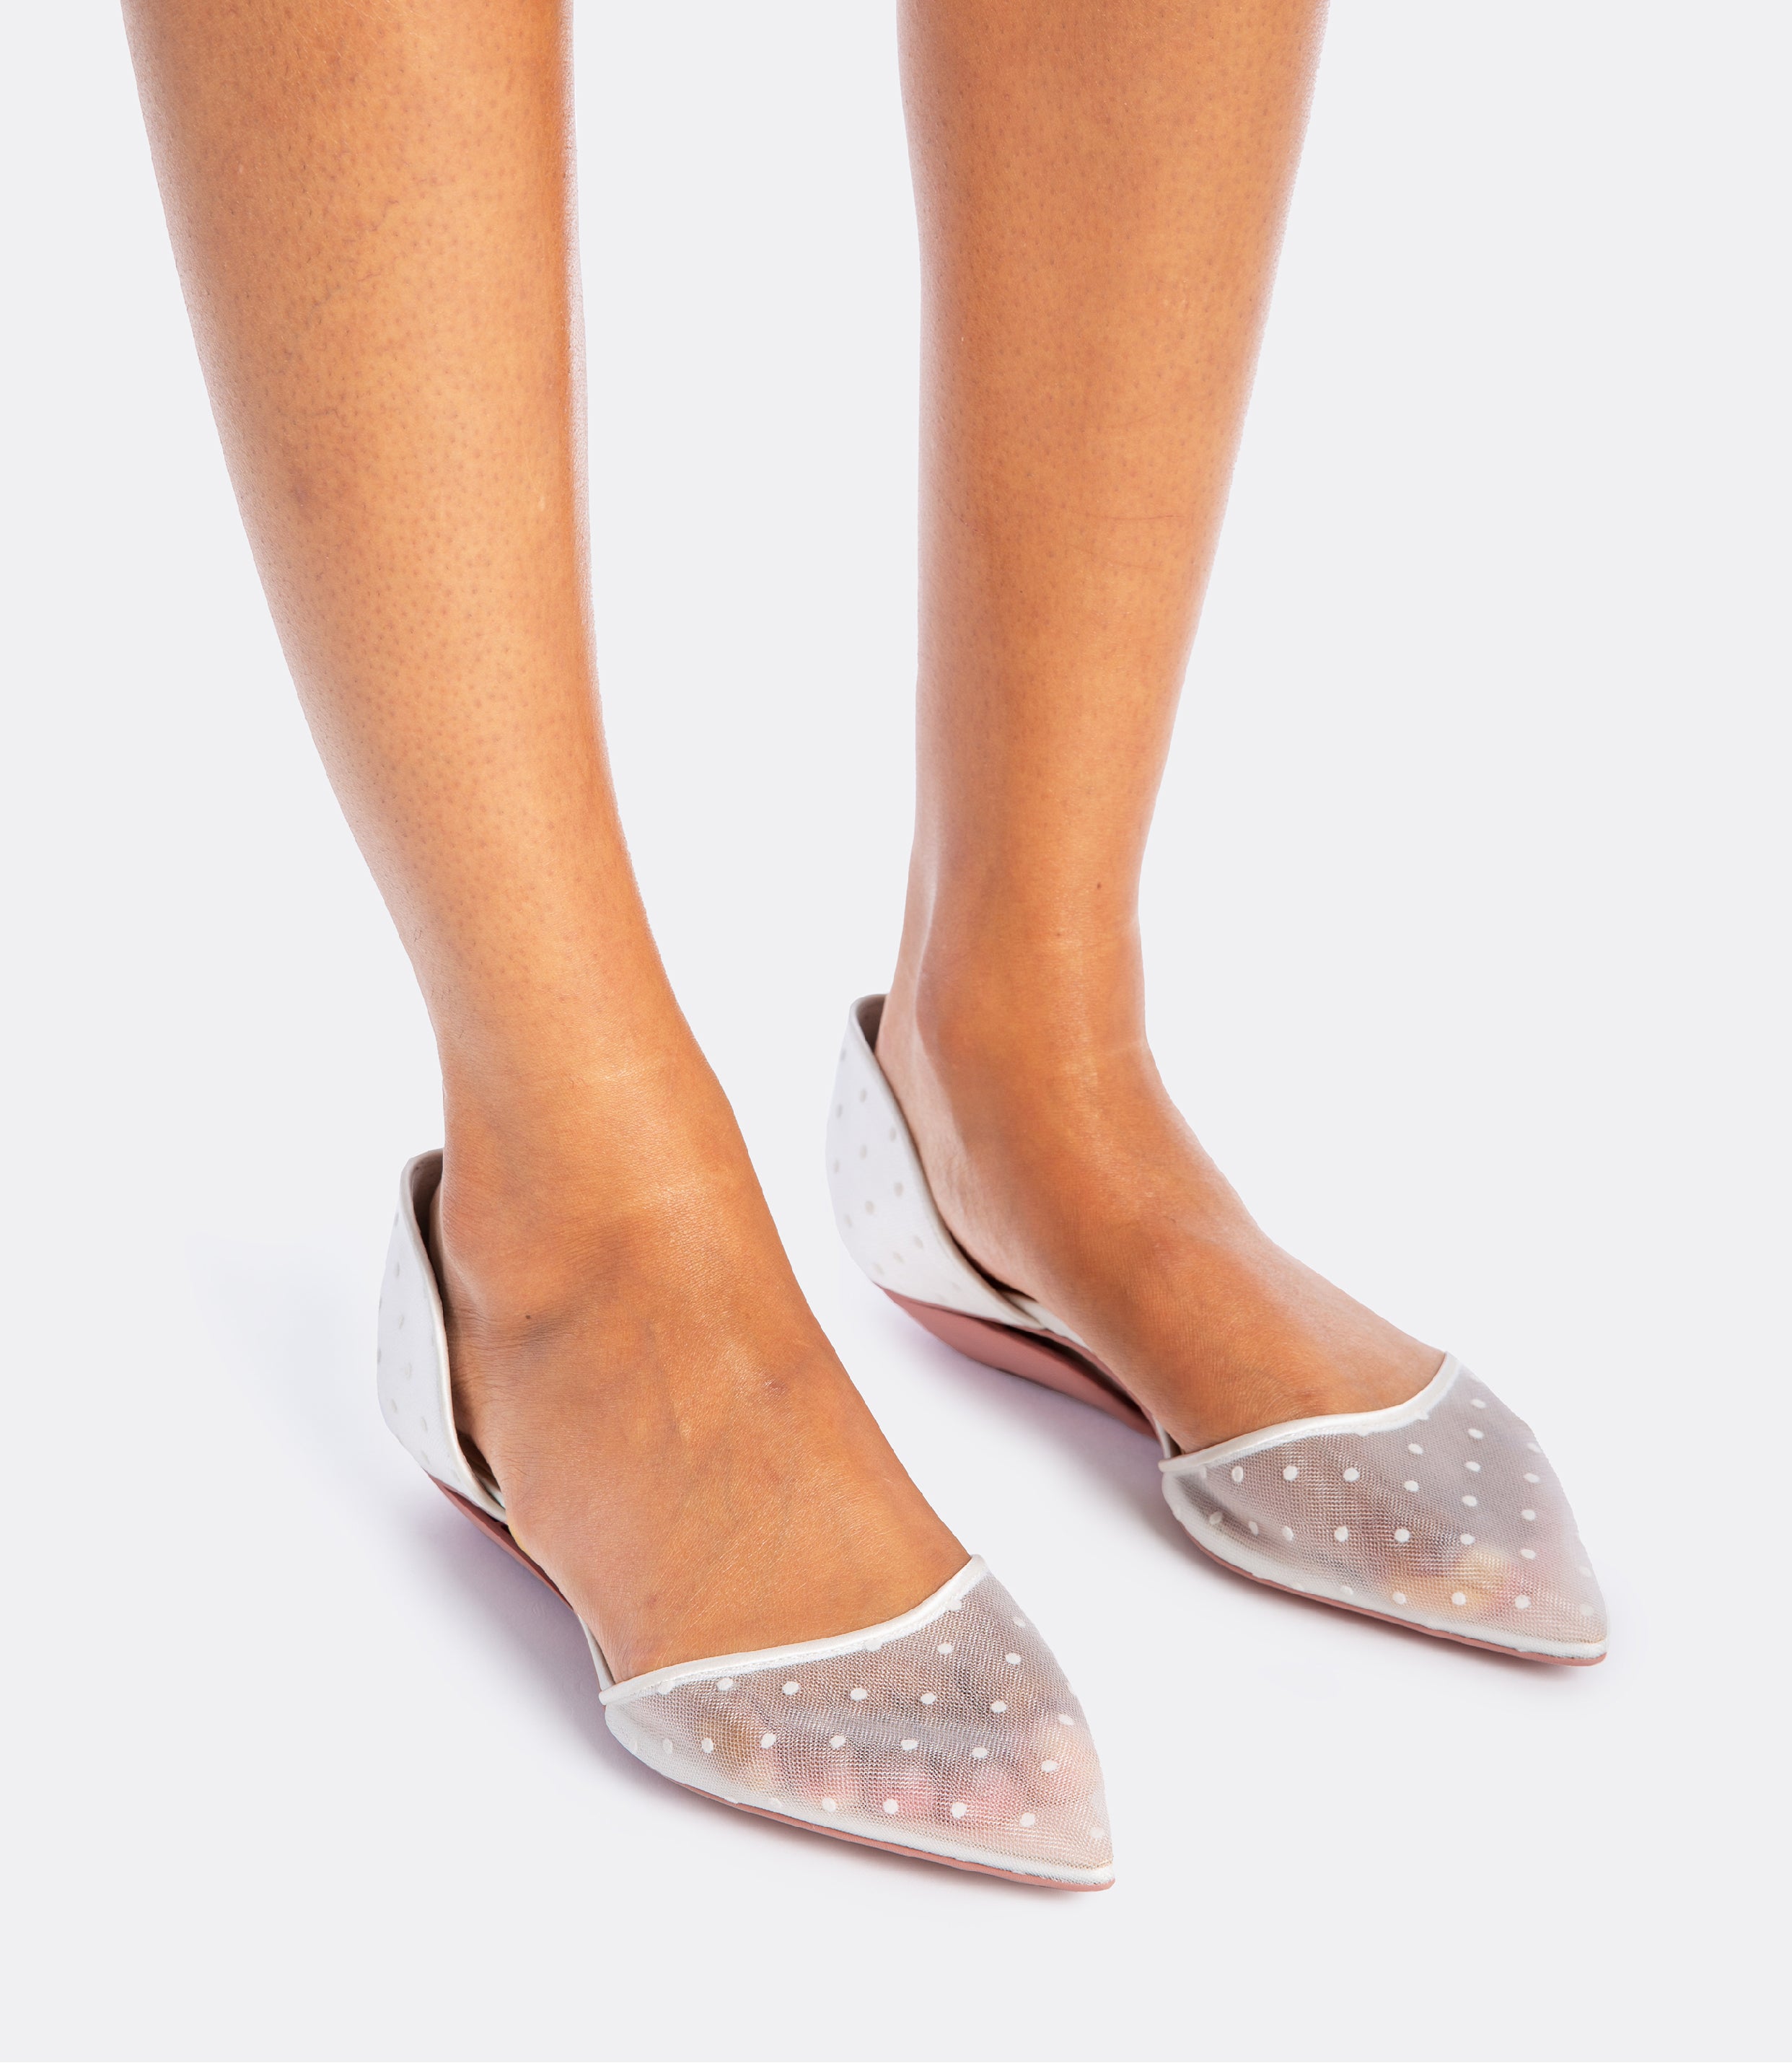 Model wearing a white polka dot mesh heel as a flat